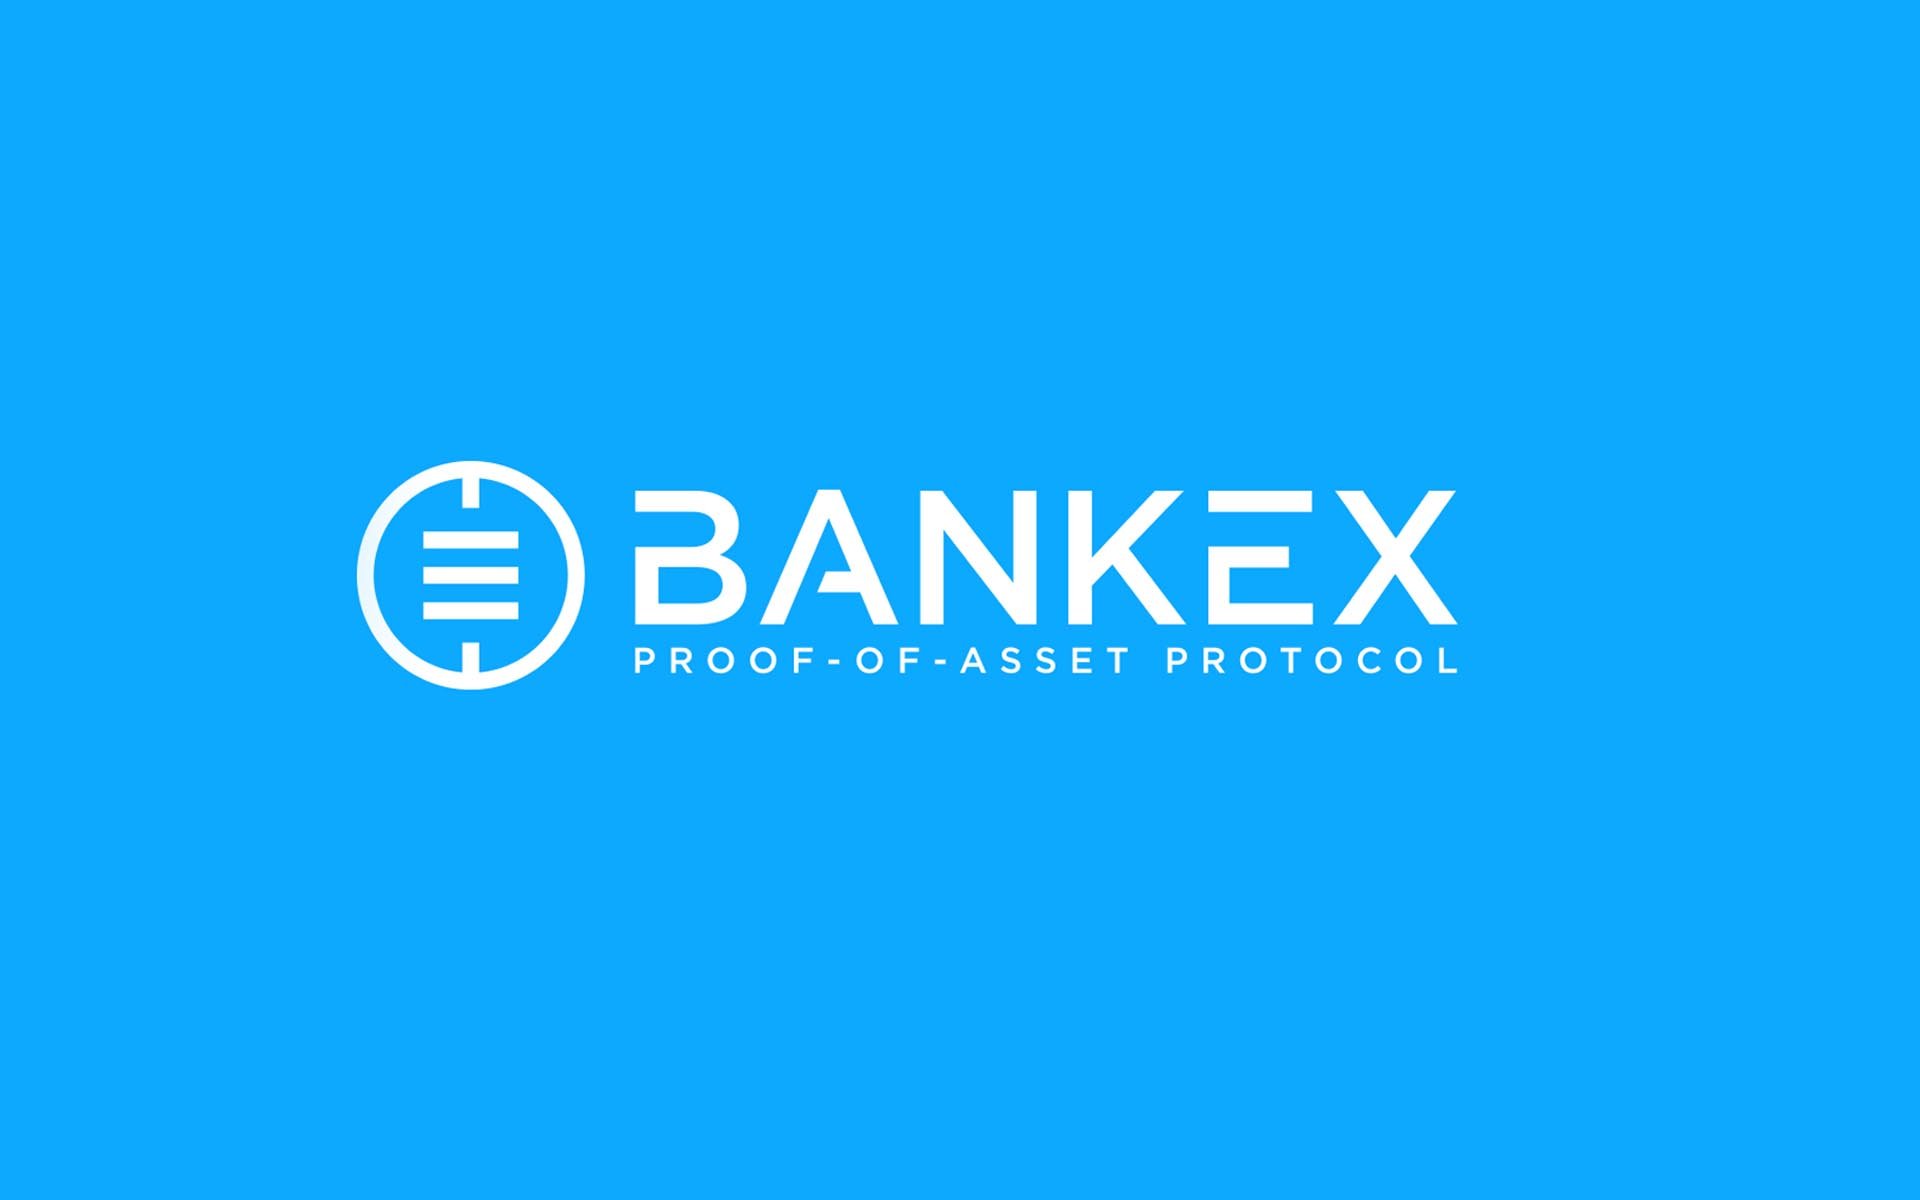 BANKEX Proof-of-Asset Protocol: Financial Market Evolution